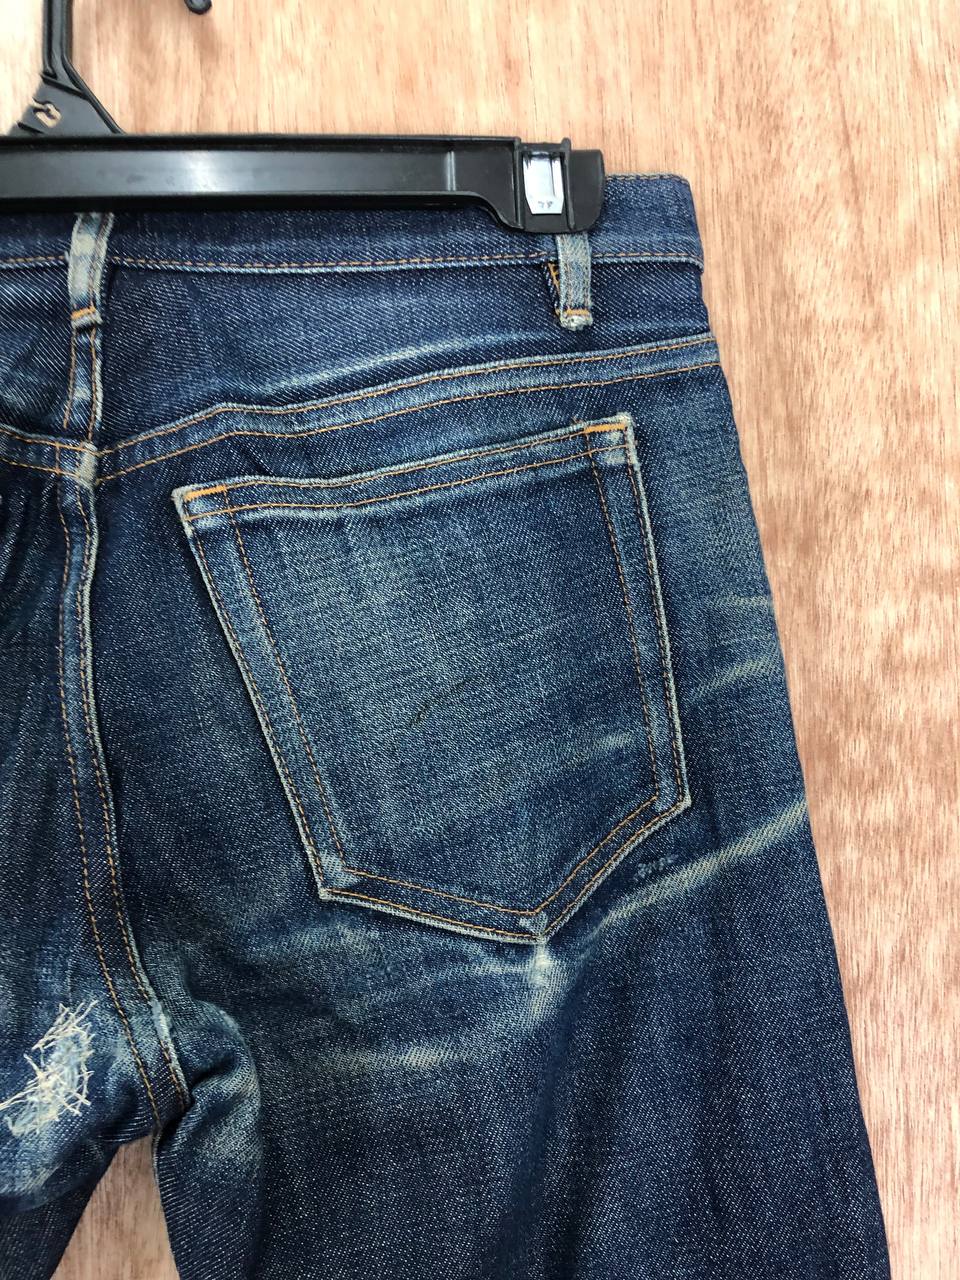 APC Petit Standard Jeans Distressed Selvedge - 18